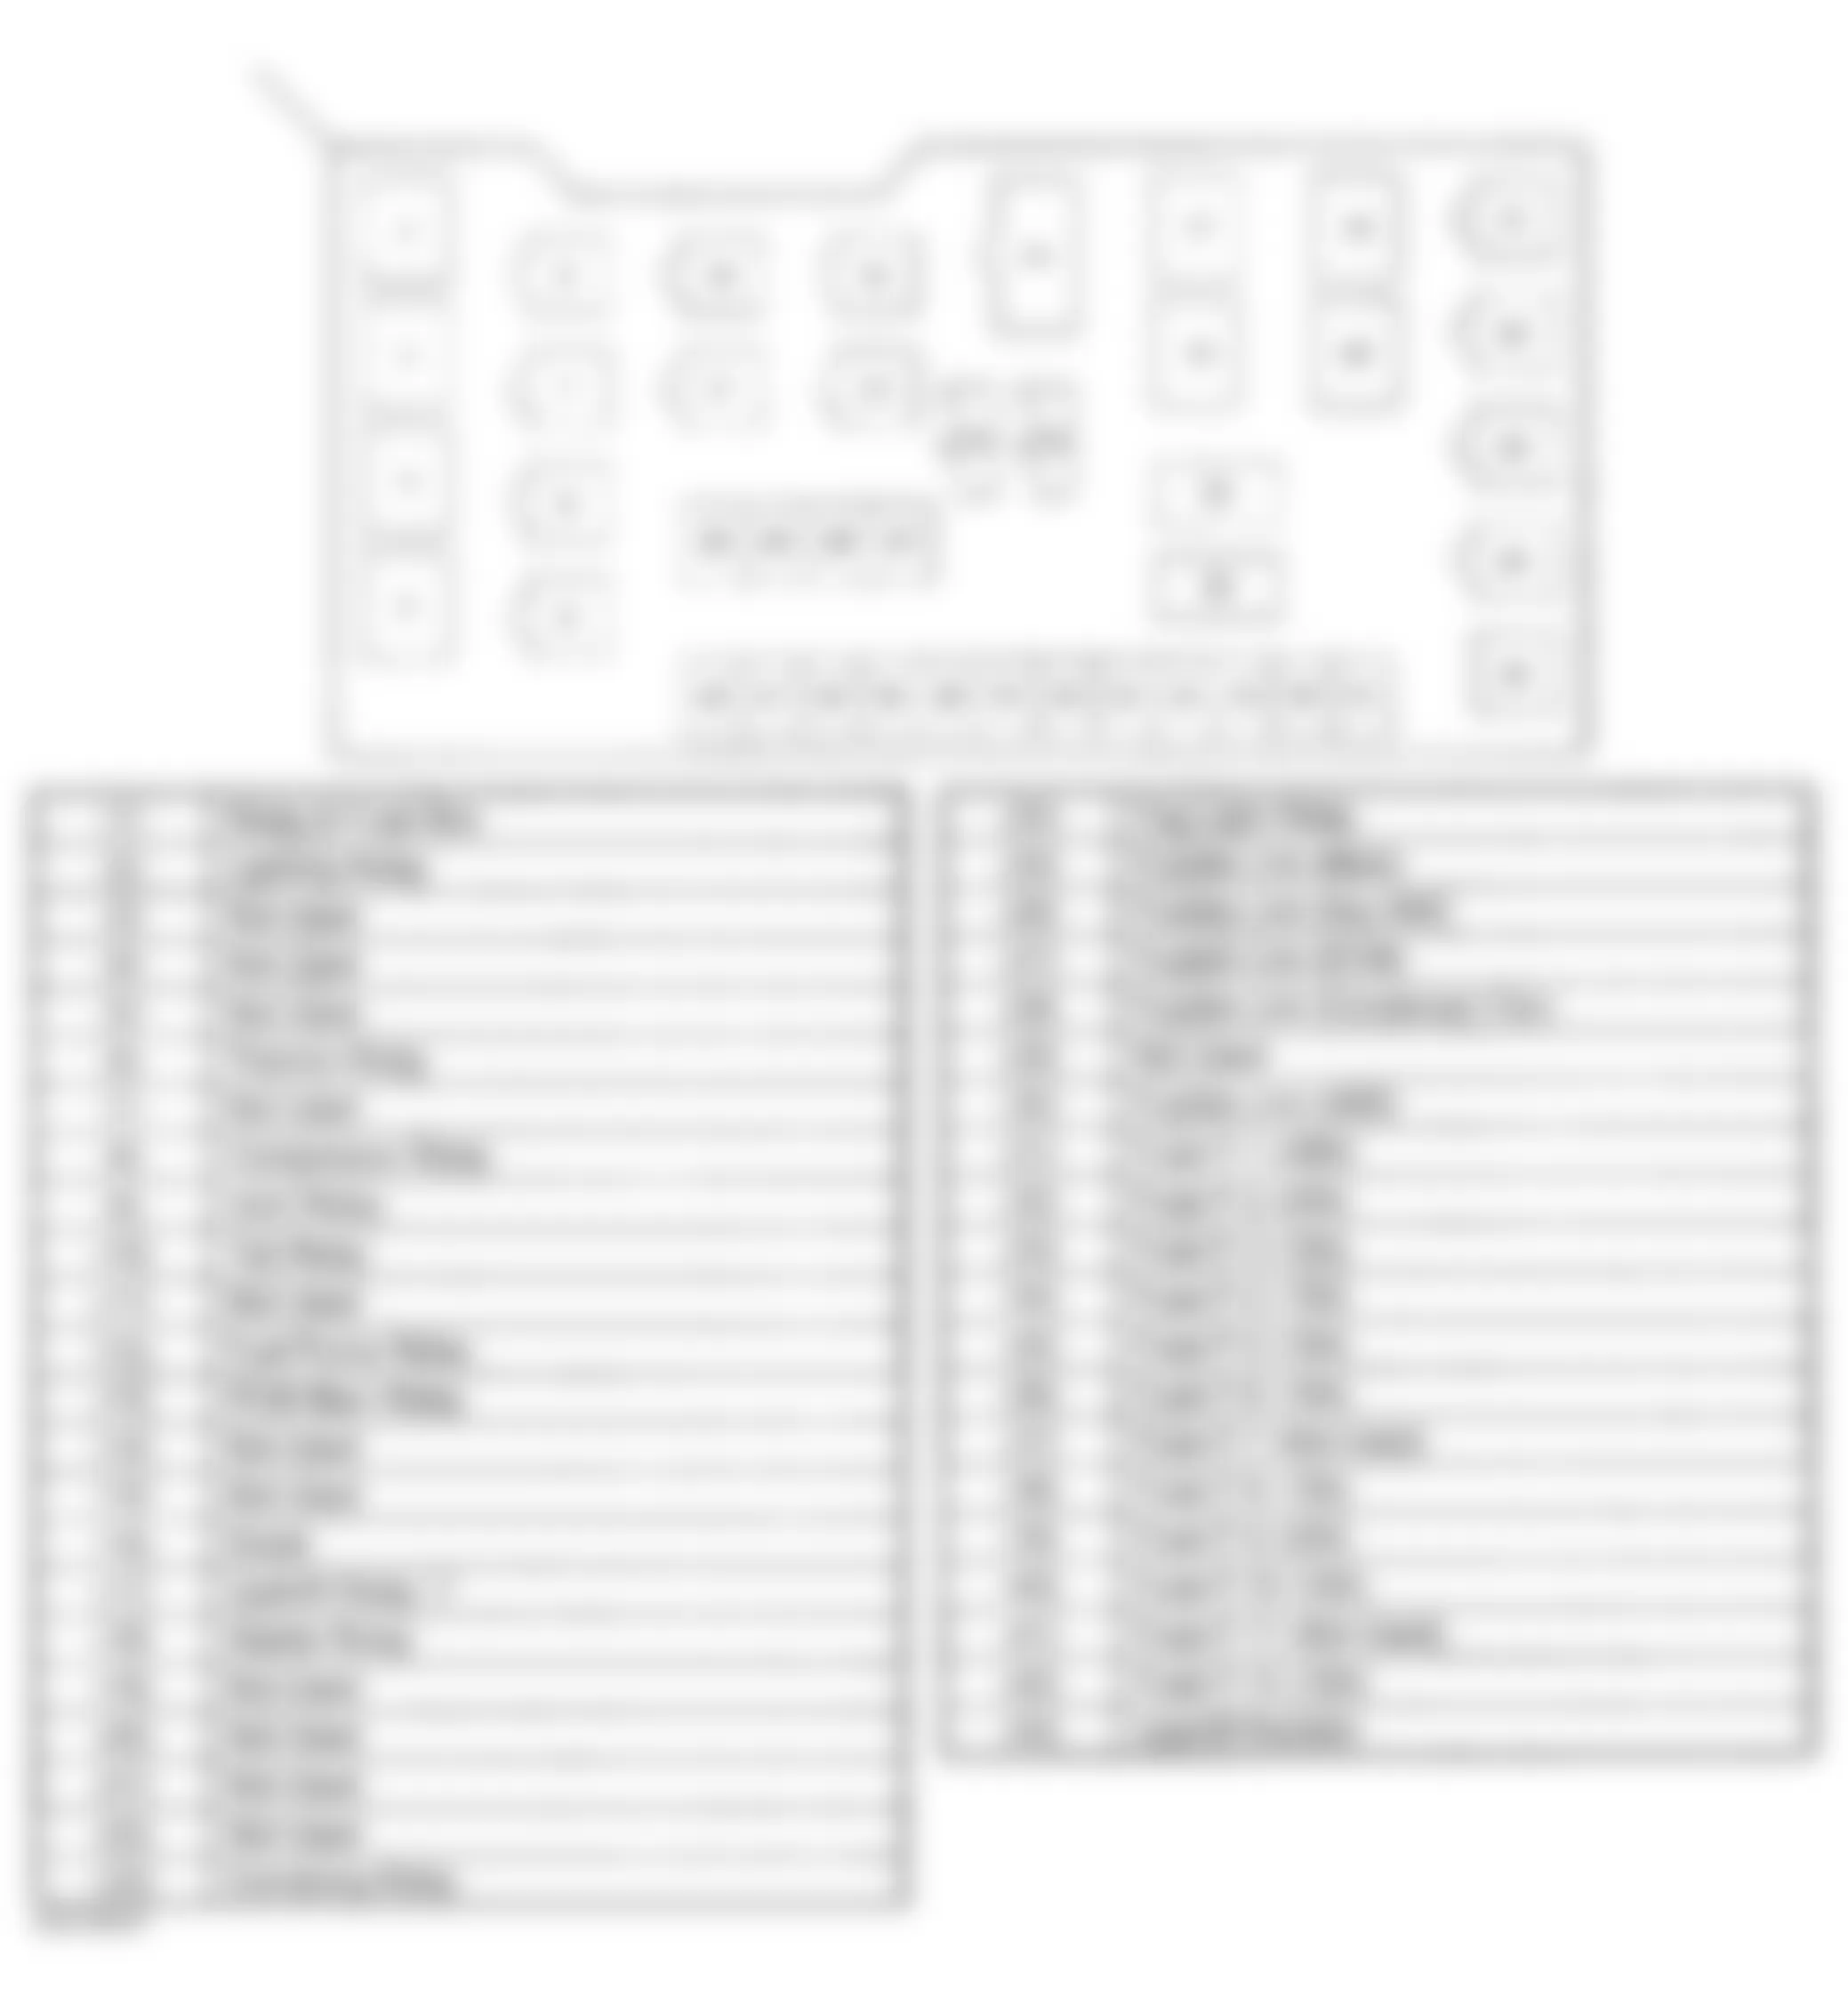 Isuzu Trooper LS 2001 - Component Locations -  Identifying Relay & Fuse Box Component Identification